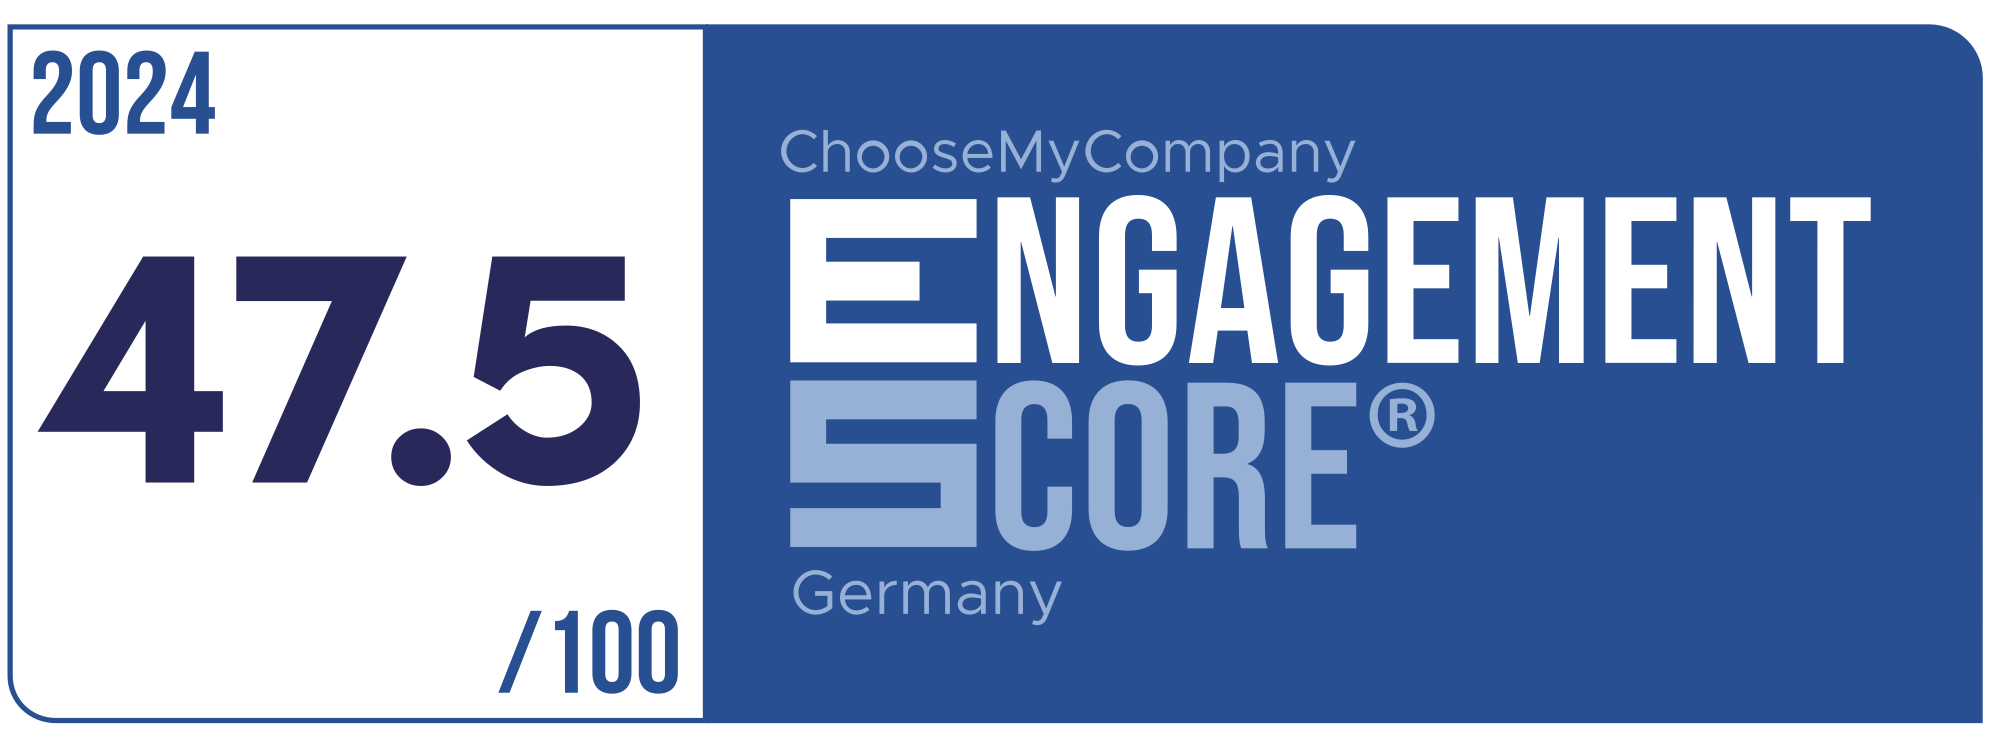 Label Engagement Score 2024 Germany